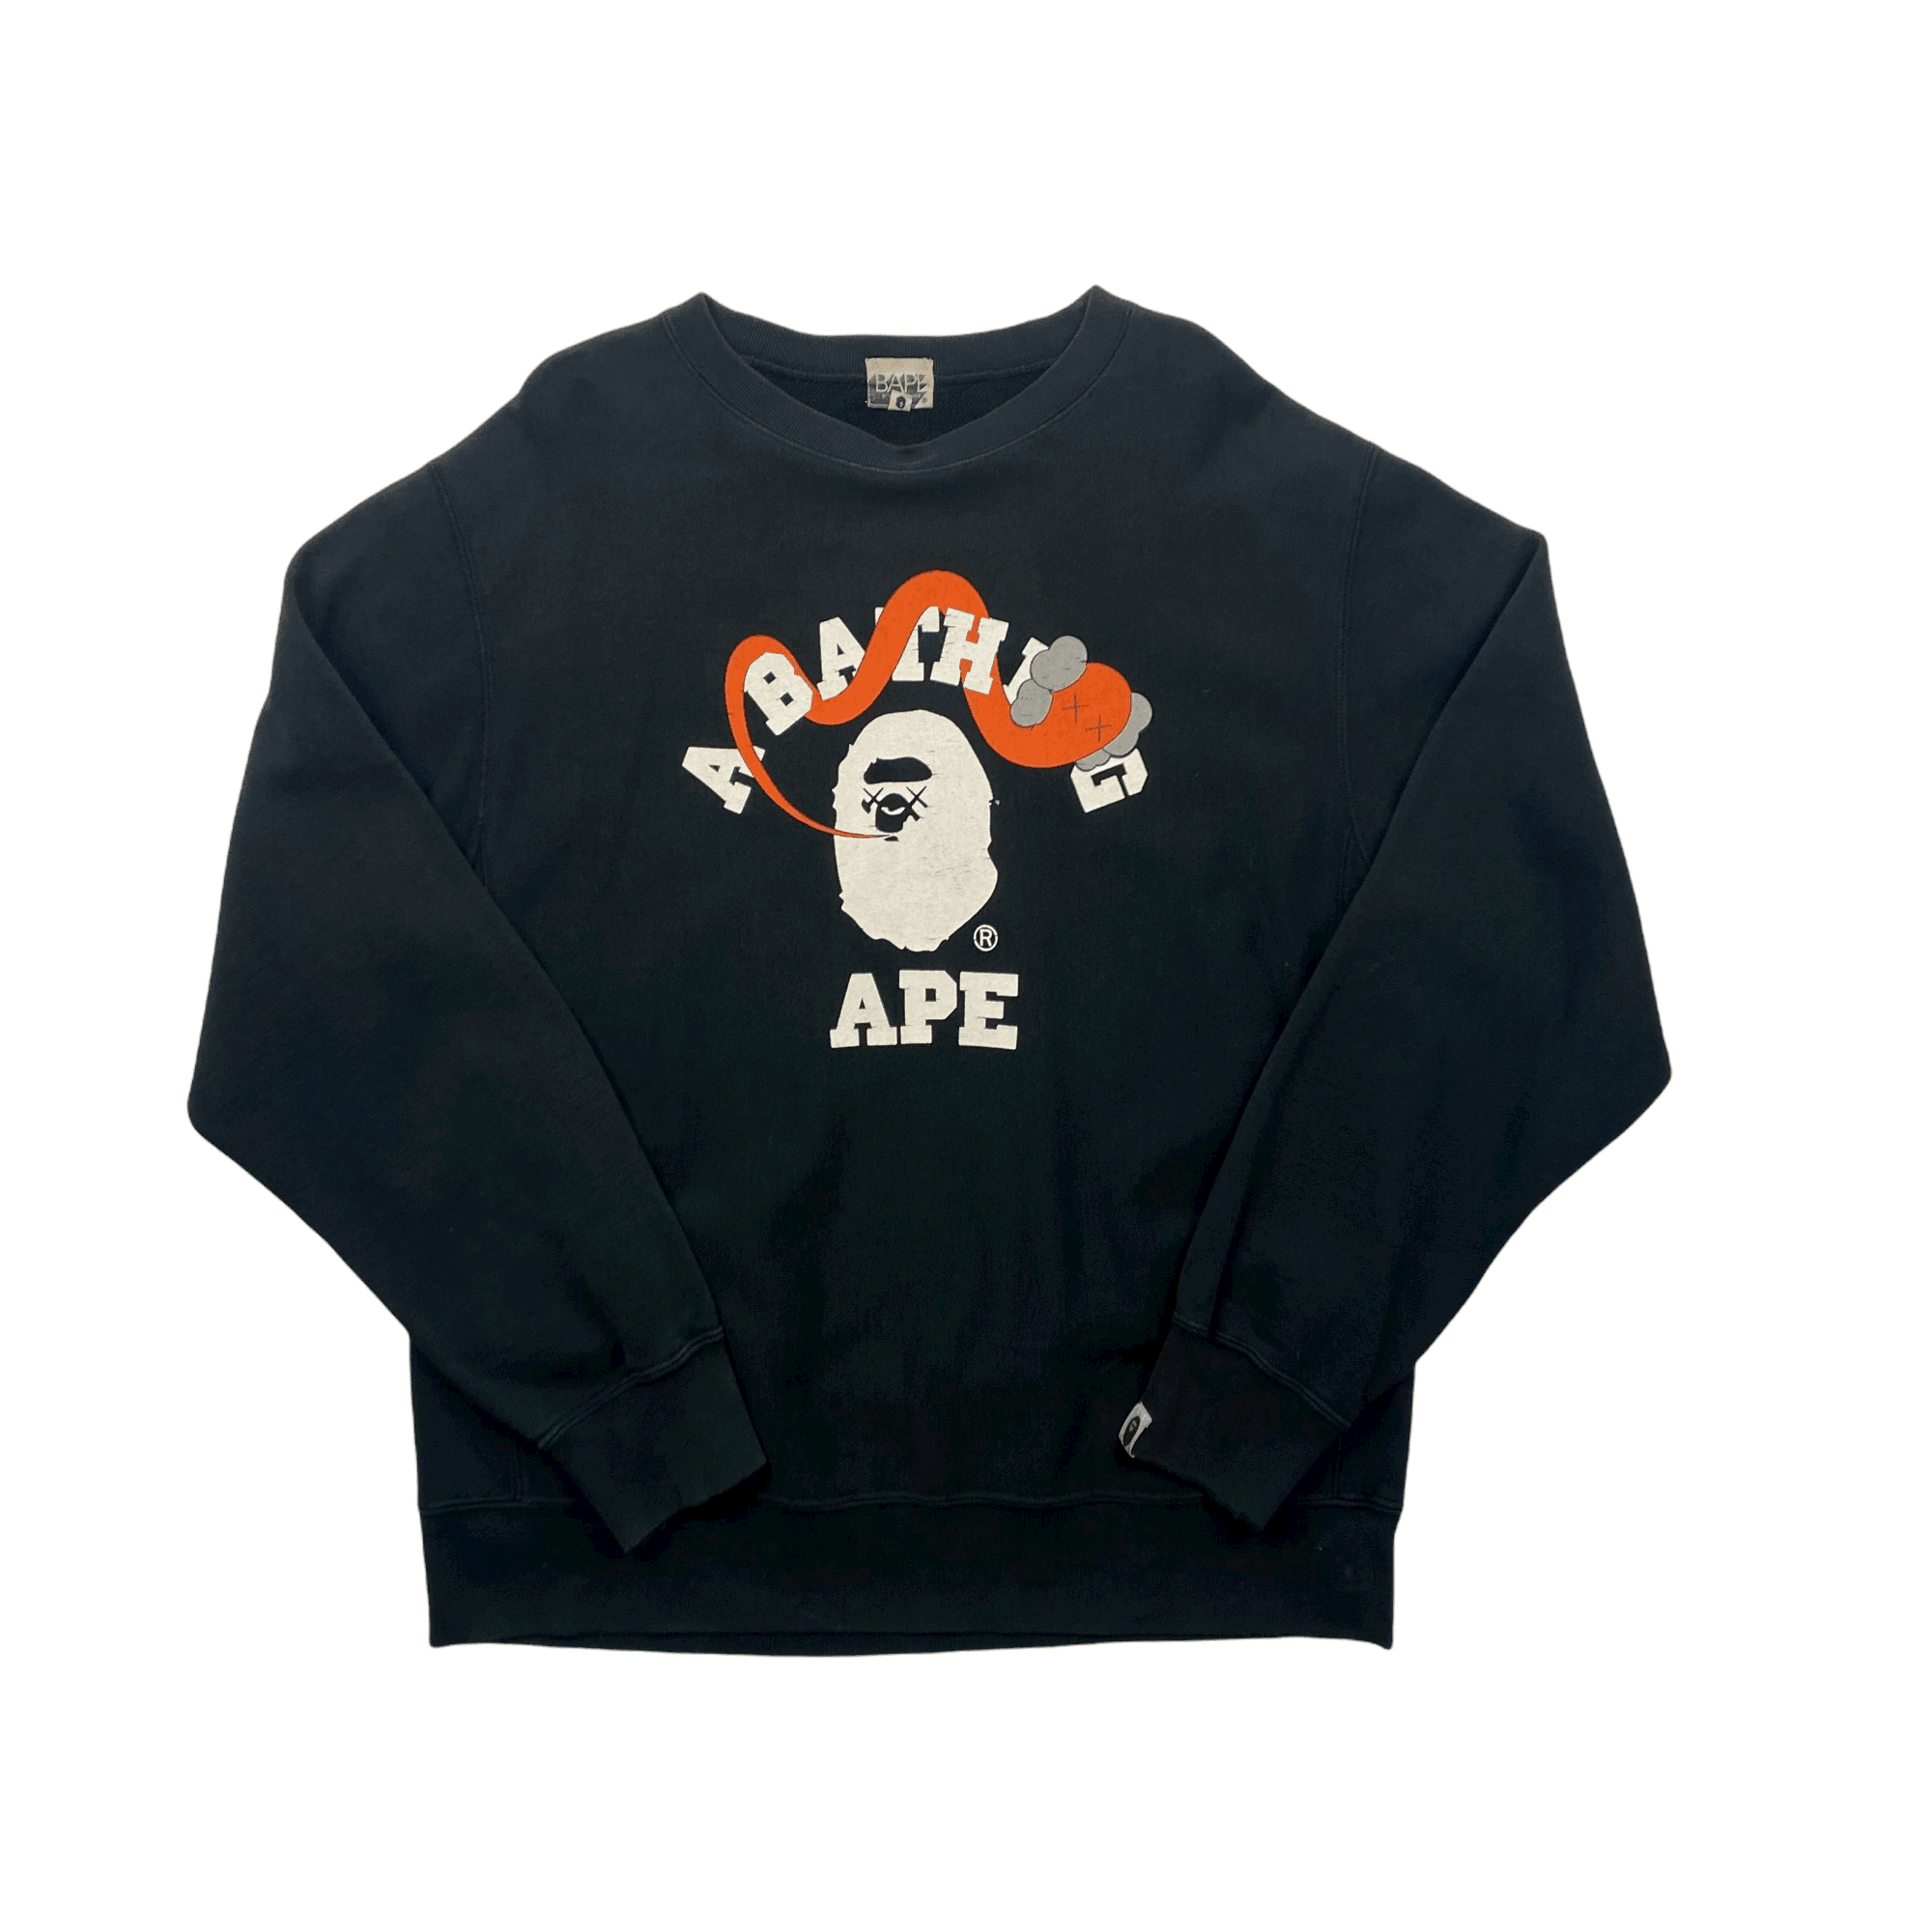 Vintage 90s Black A Bathing Ape (BAPE) x Kaws Sweatshirt - Medium